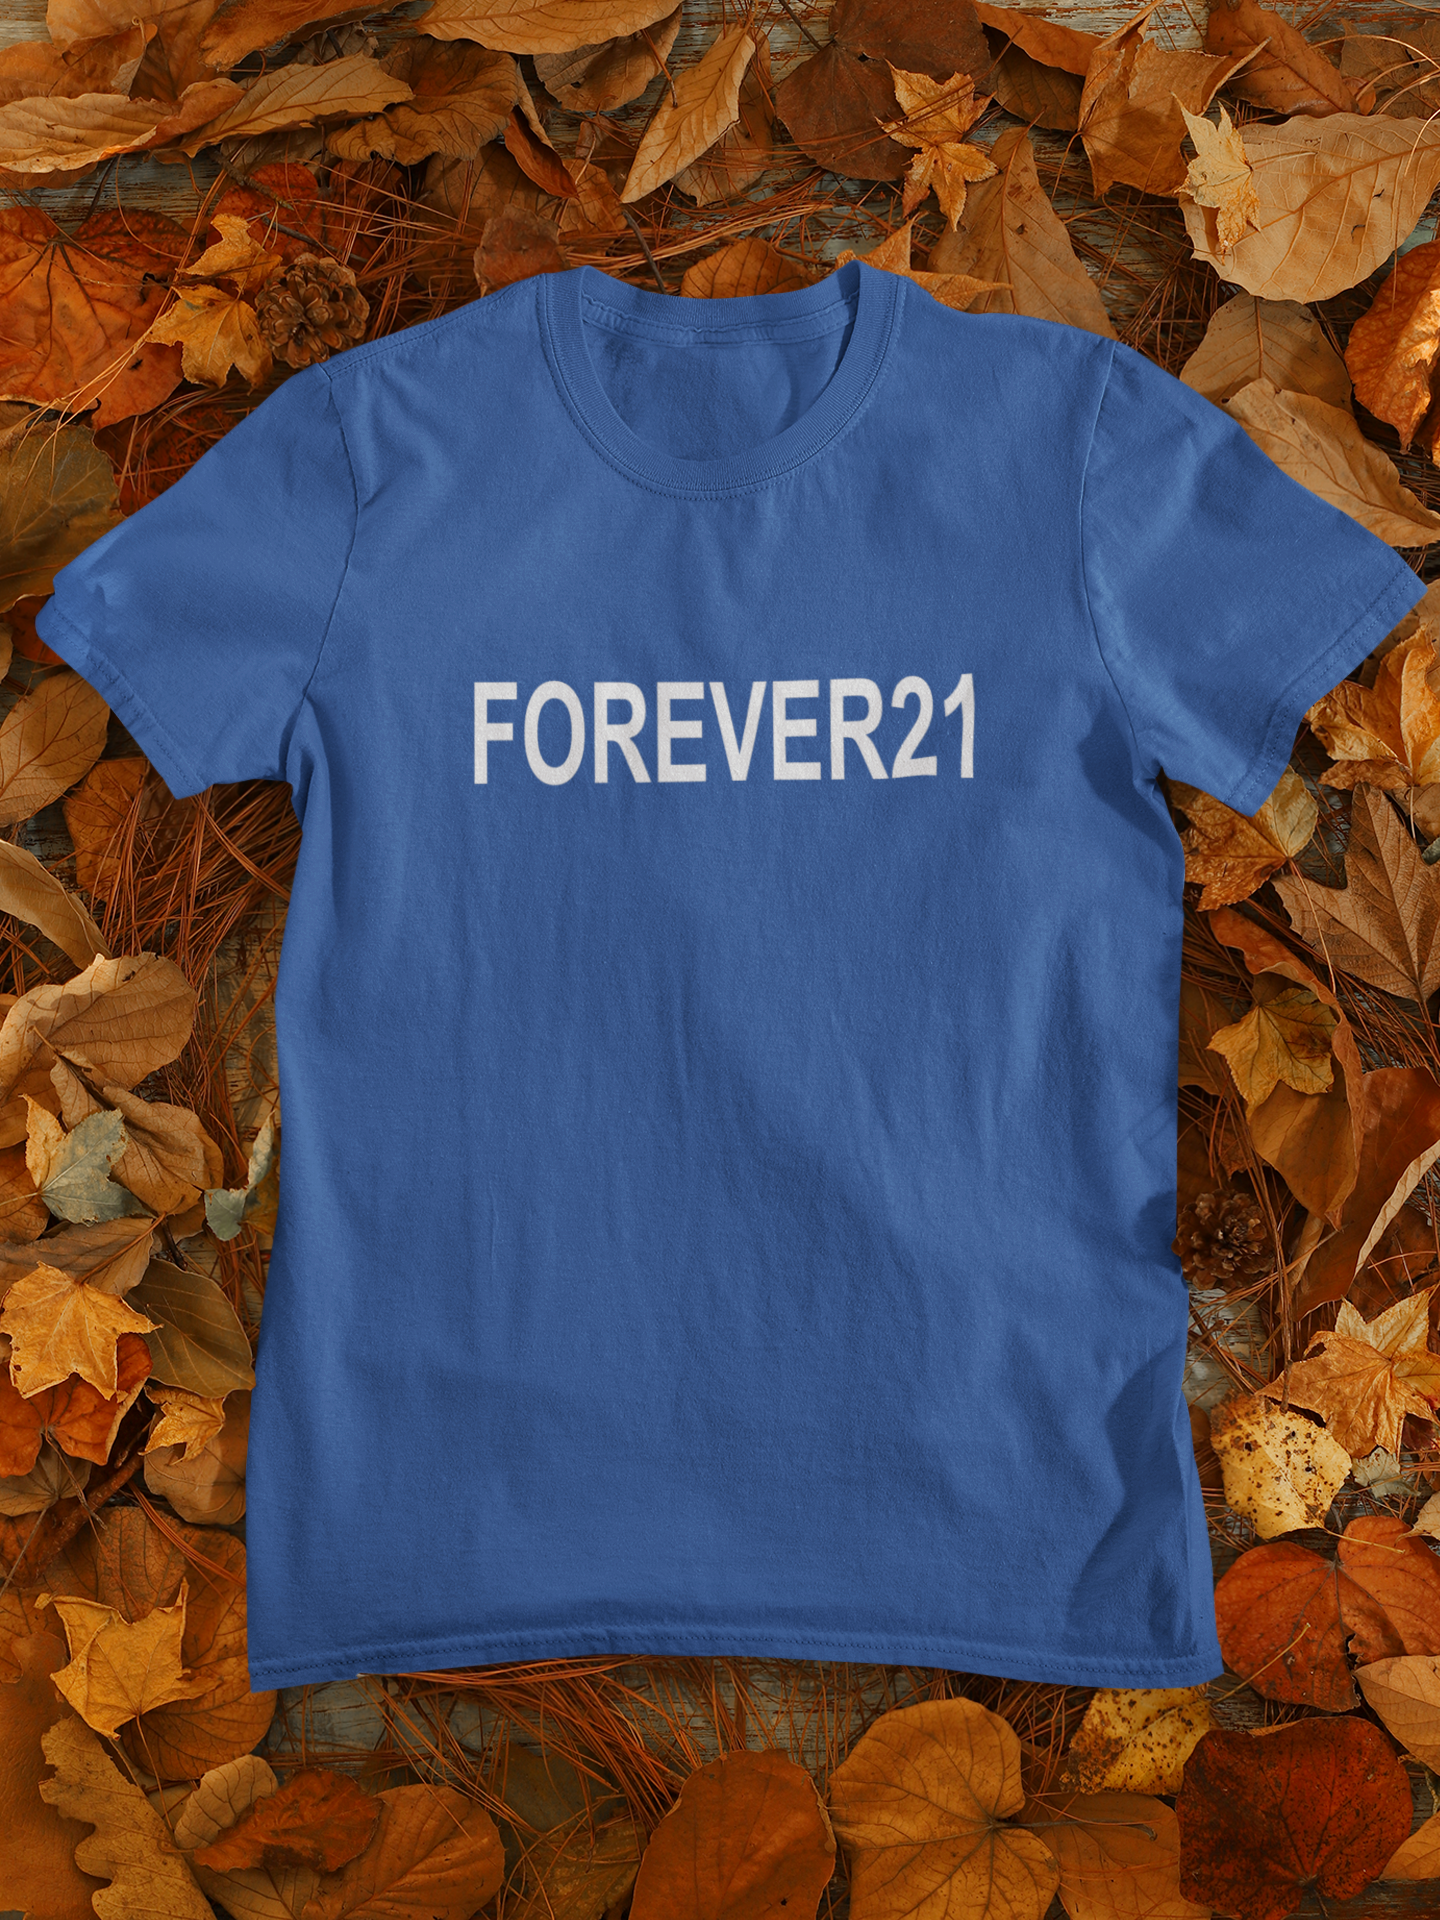 Forever21 Arishfa Khan Celebrity T-shirt- FunkyTeesClub